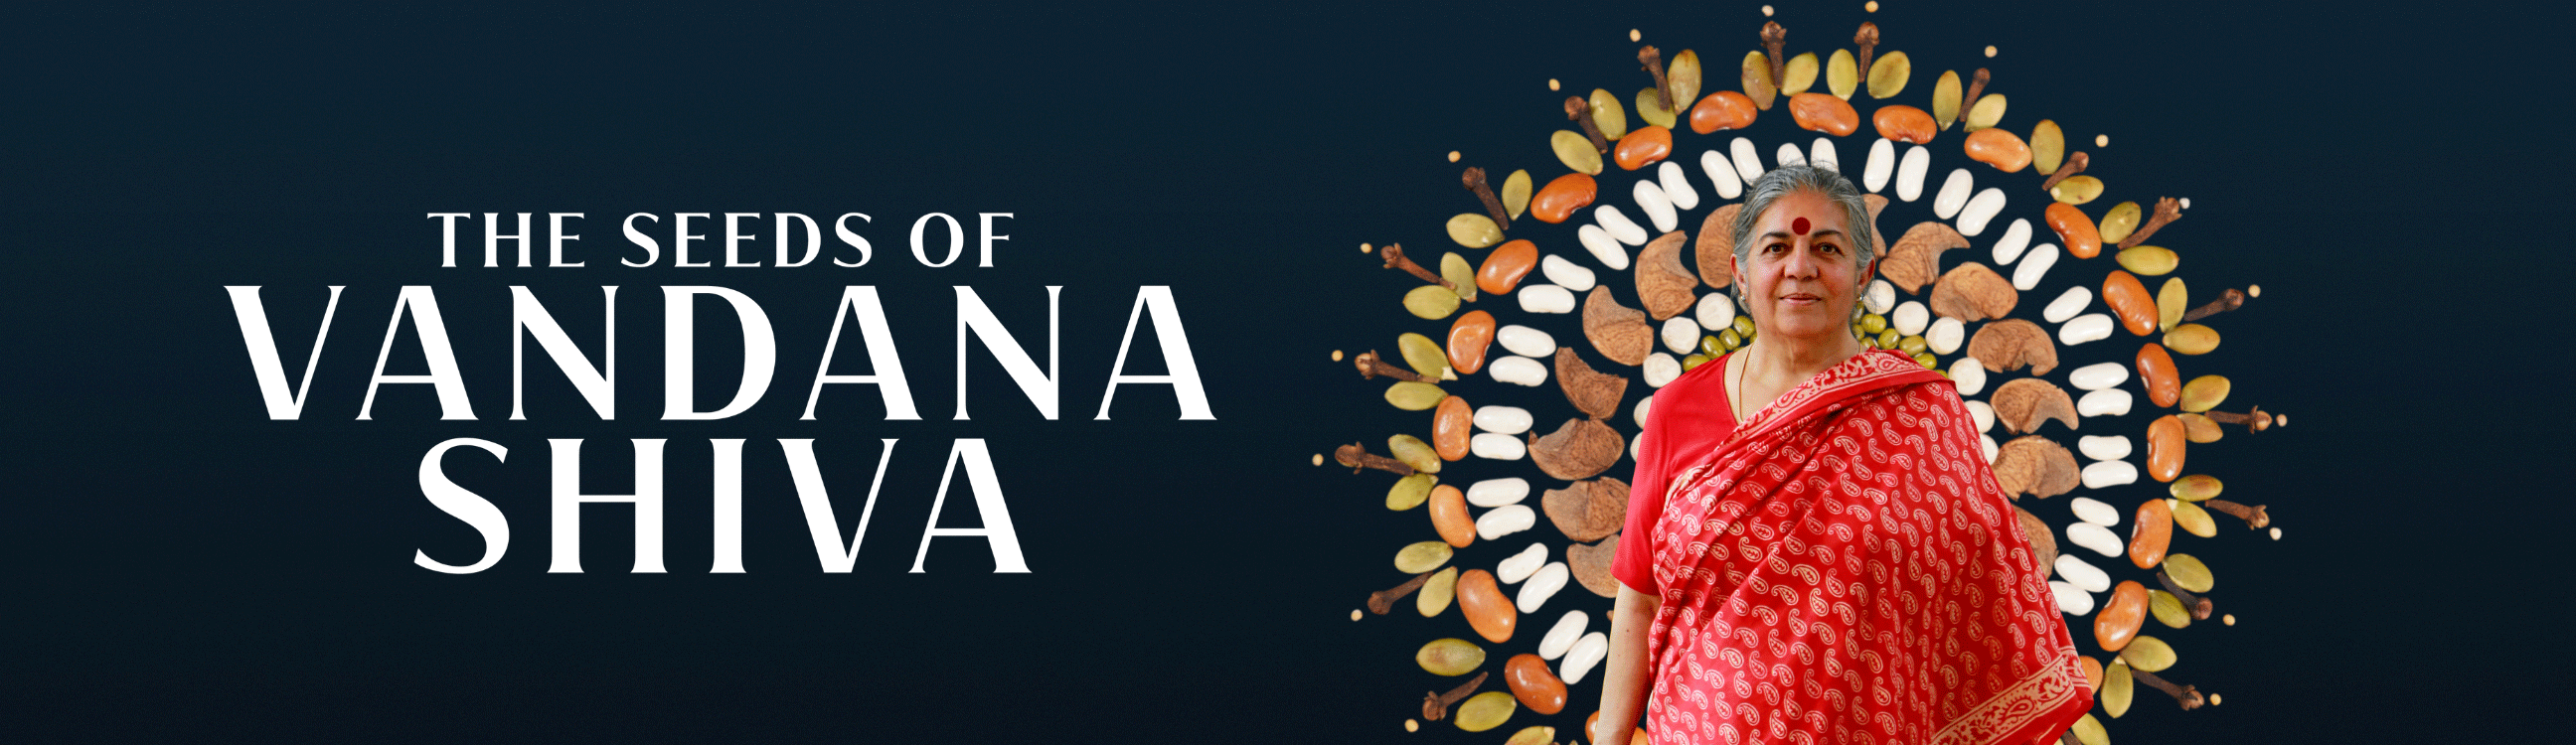 Image for The Seeds of Vandana Shiva